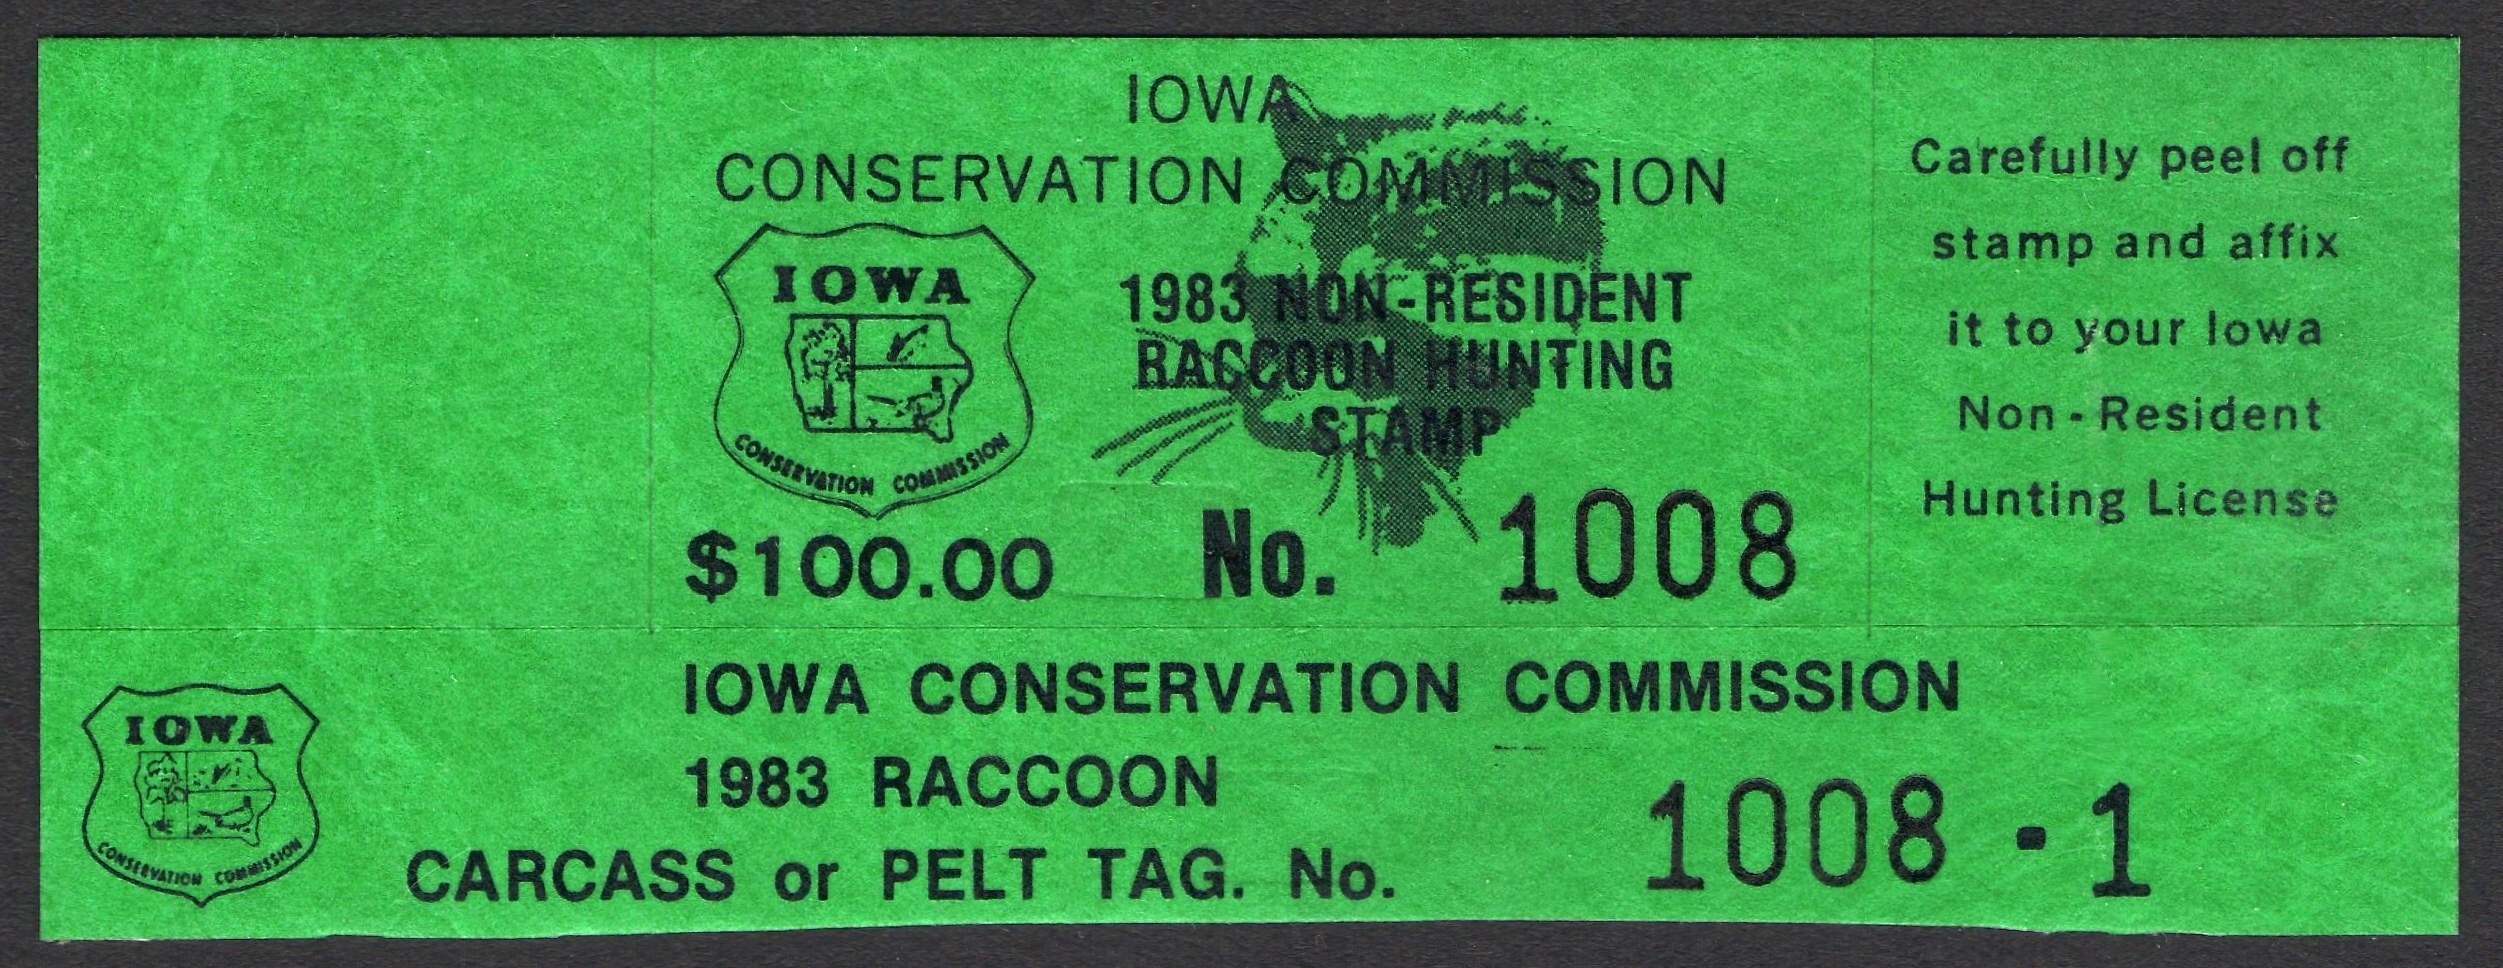 1983 Iowa NR Raccoon and Tag